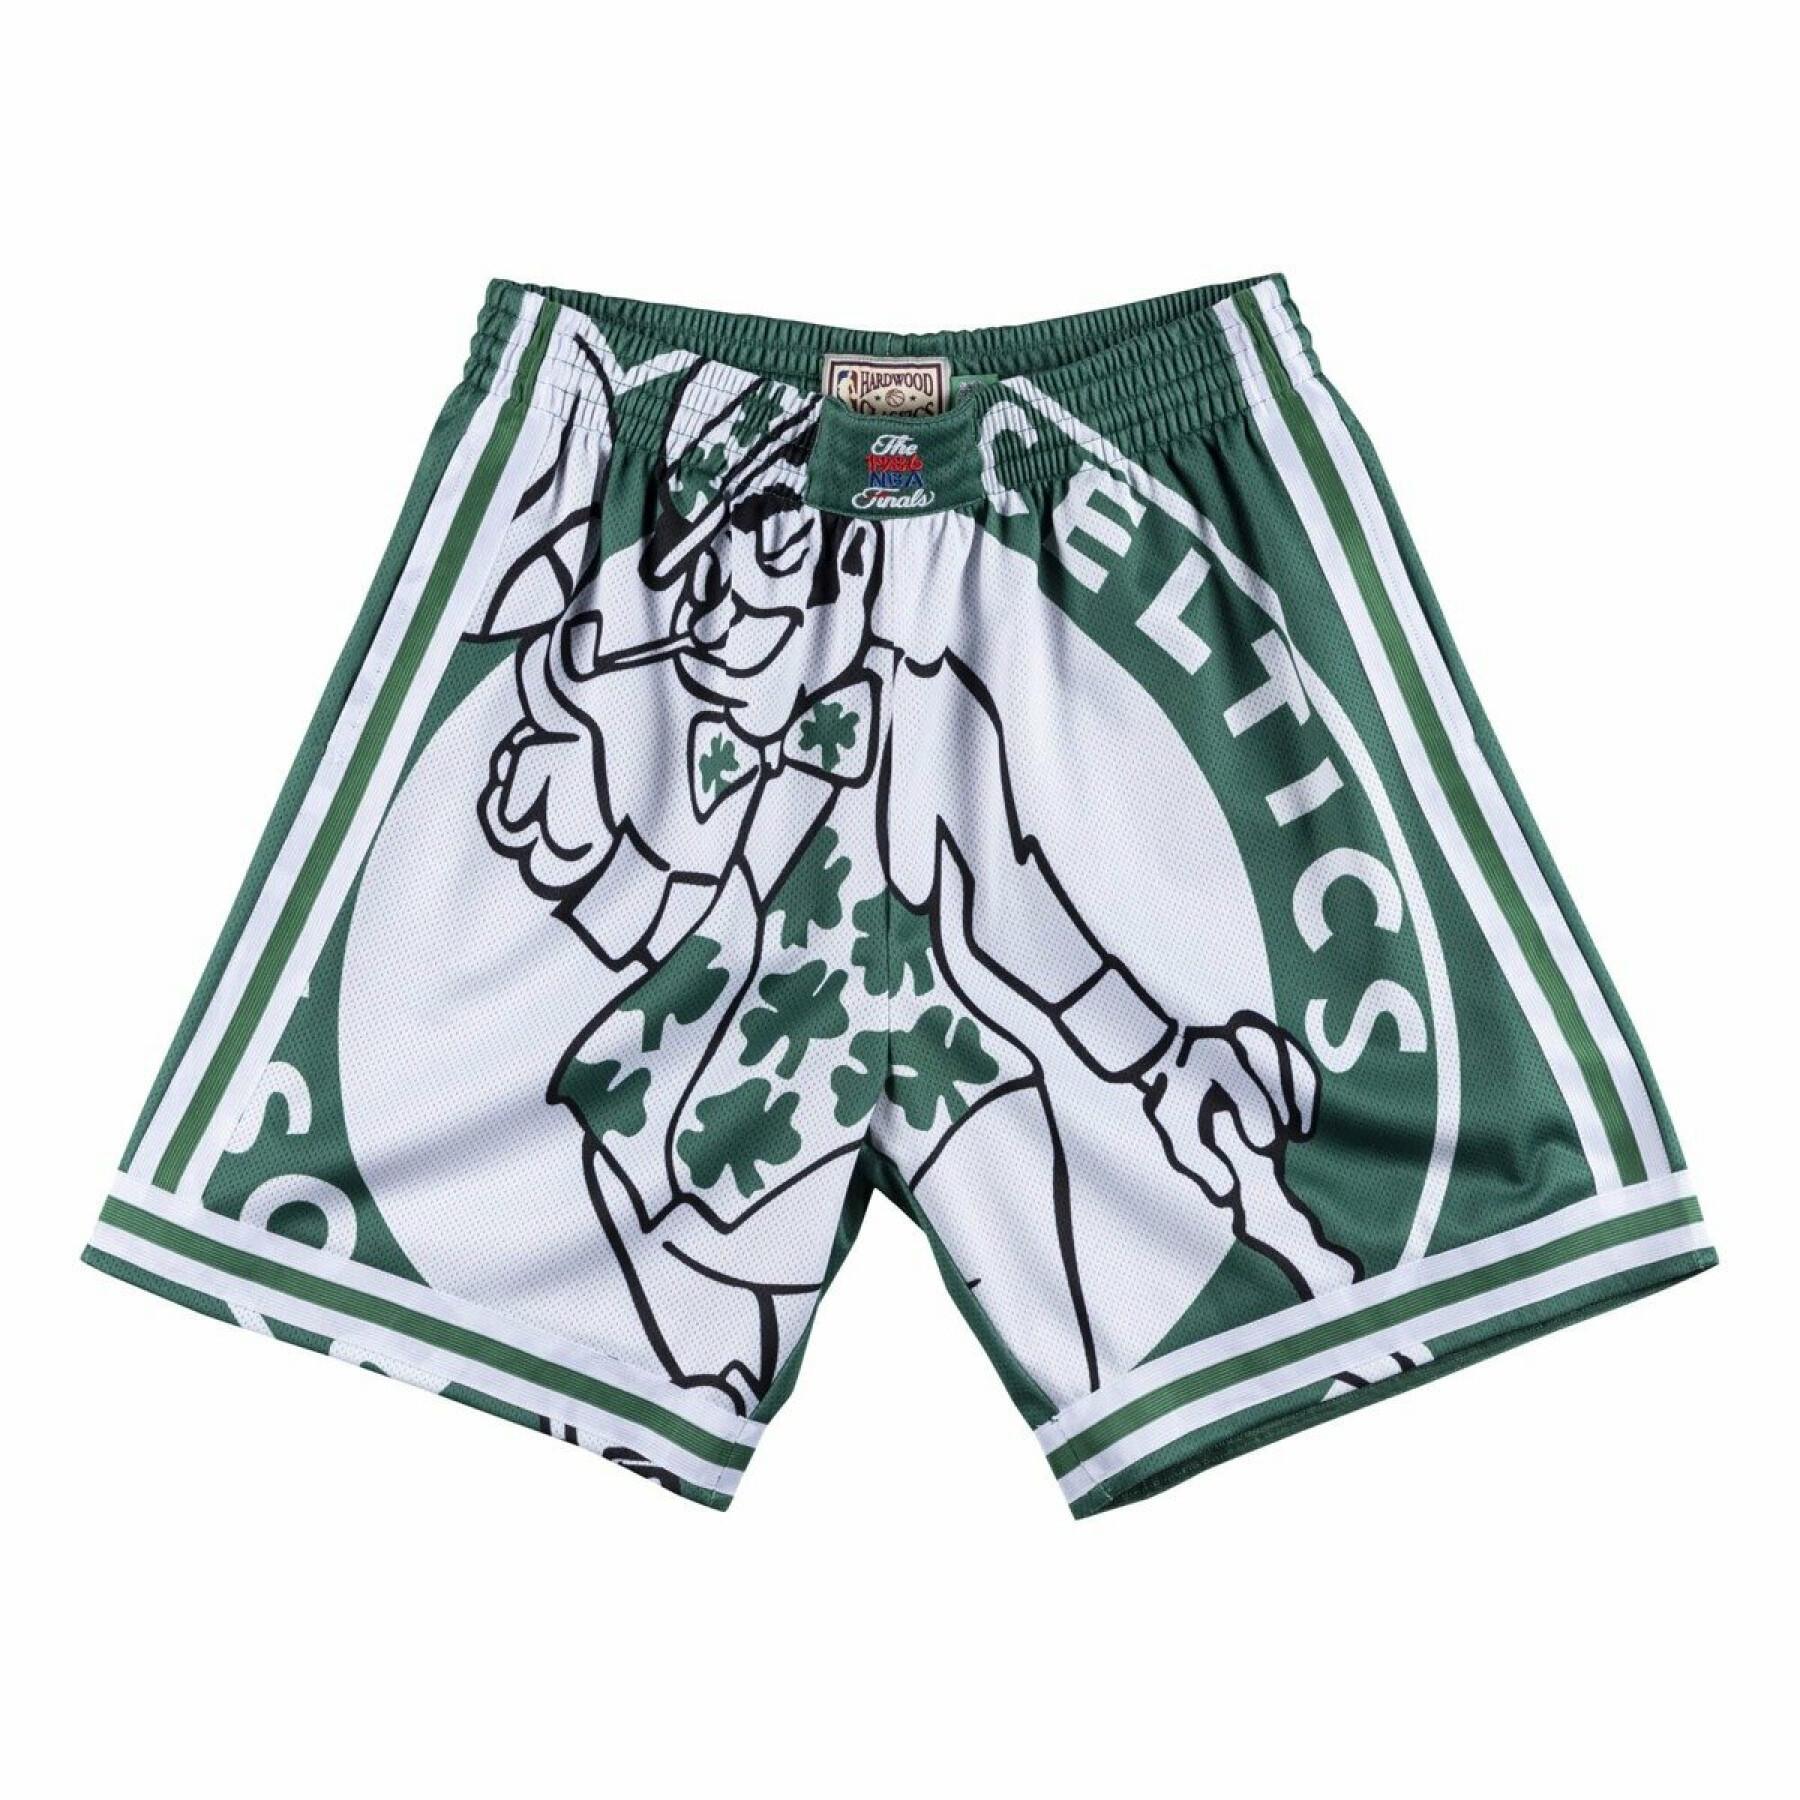 Kort Boston Celtics big face celtics 1985/86